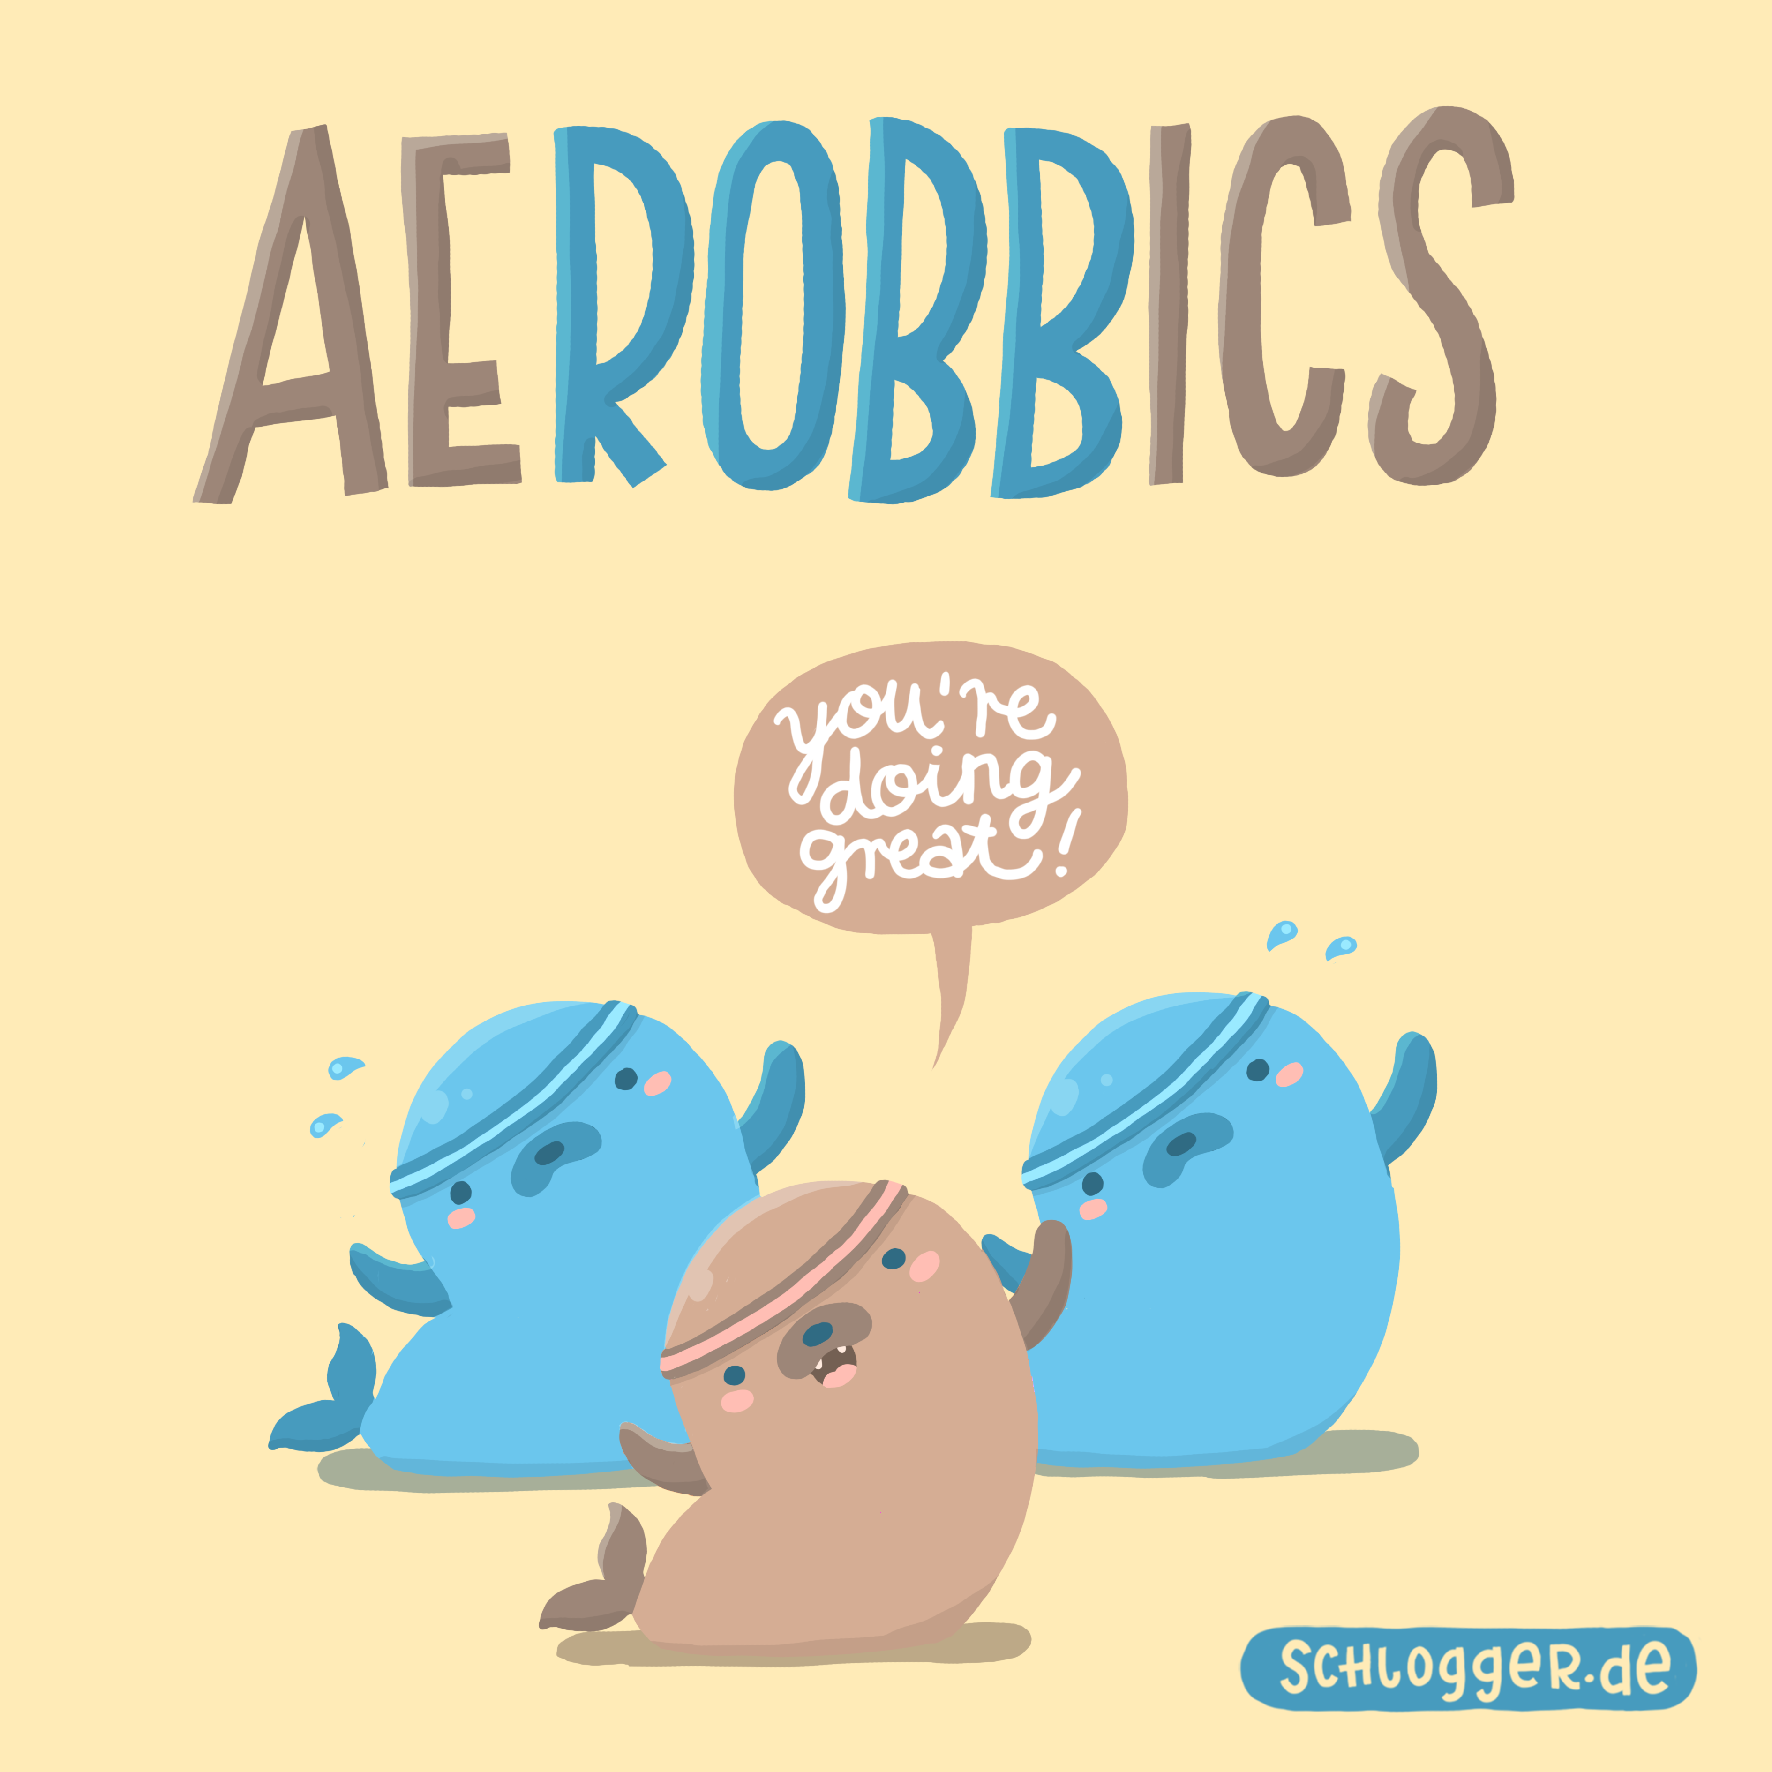 Aerobbics